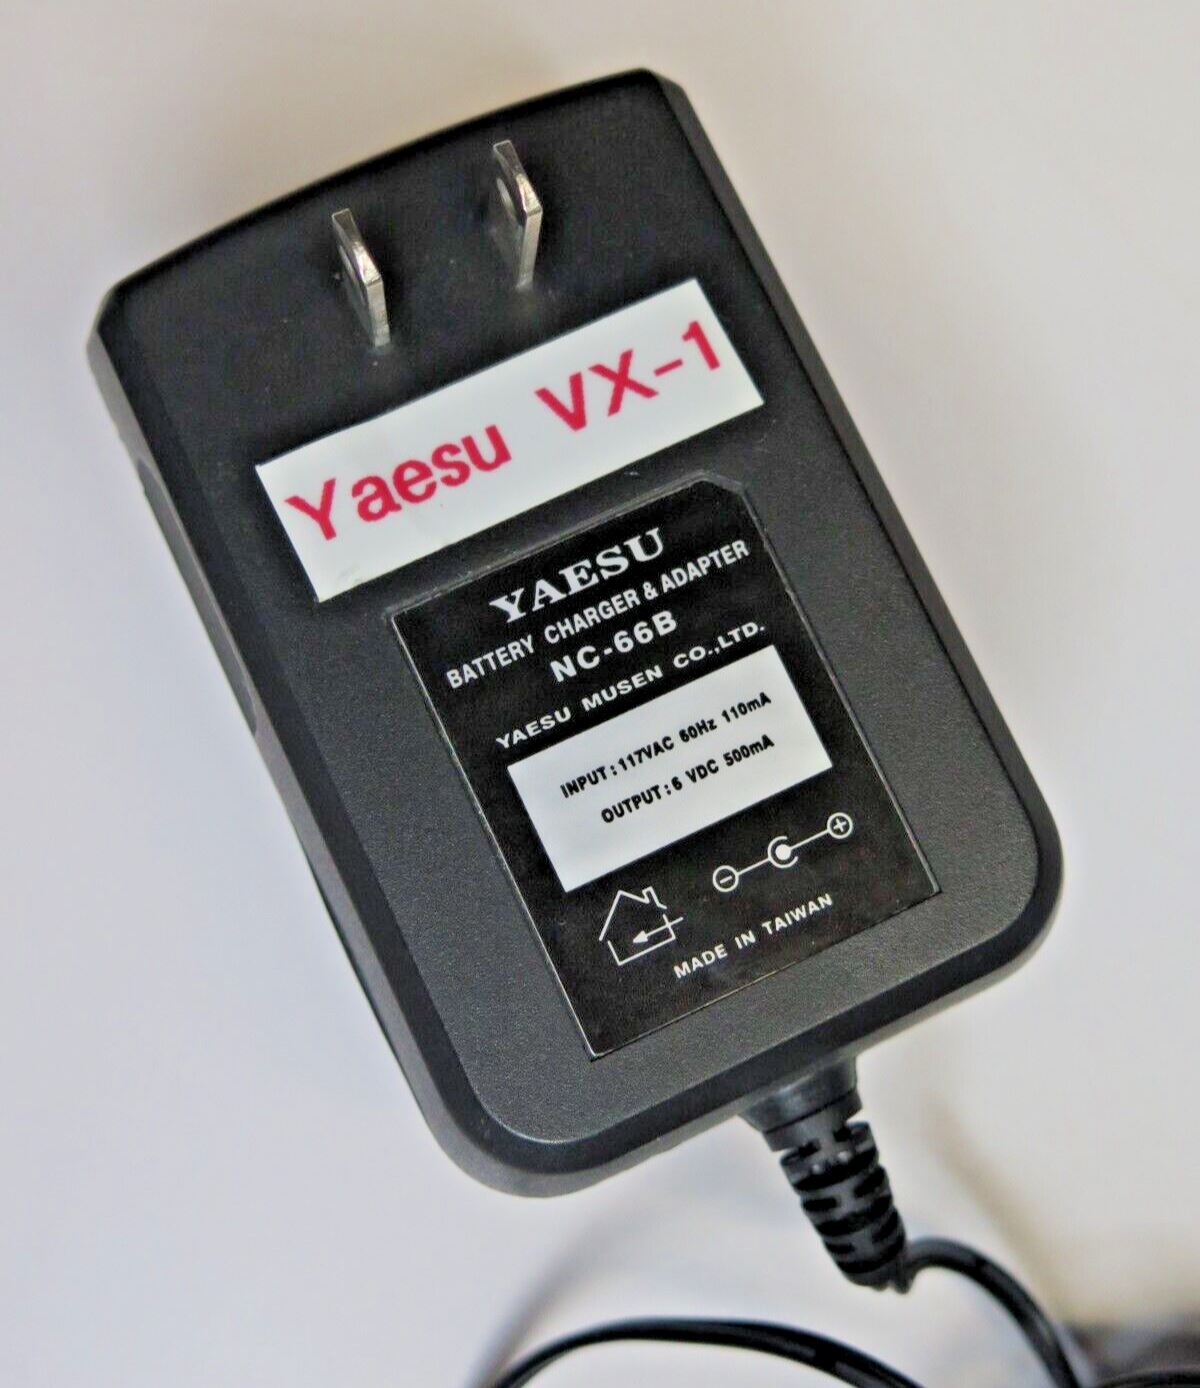 YAESU ORIGINAL Adapter Charger NC-66B for VX-1 - AC Power Cord